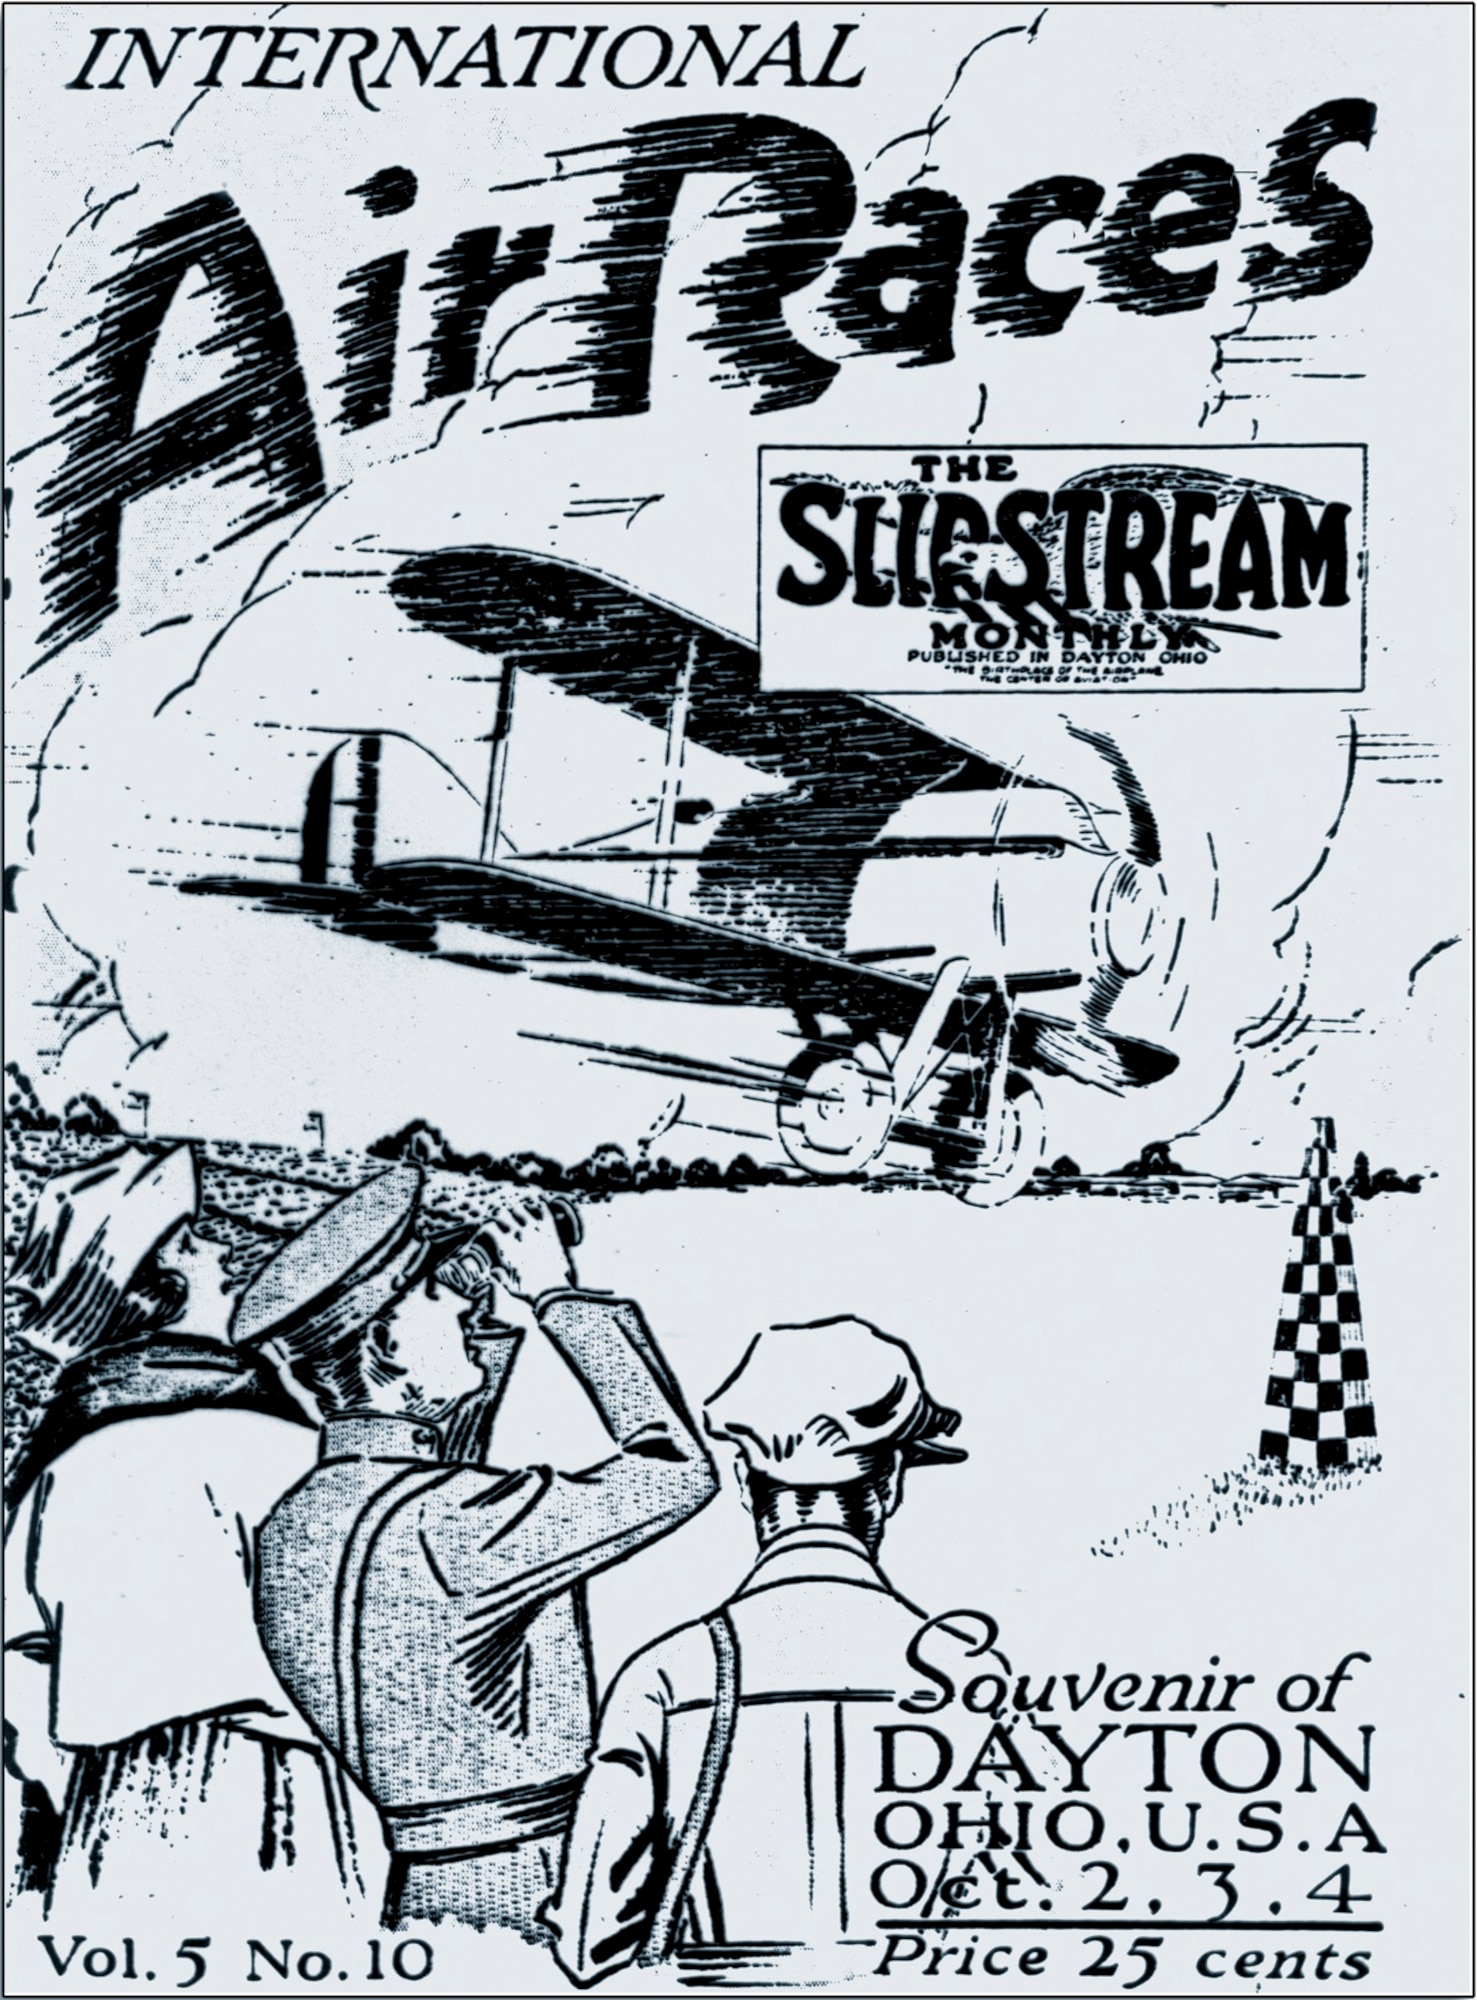 image of air race program